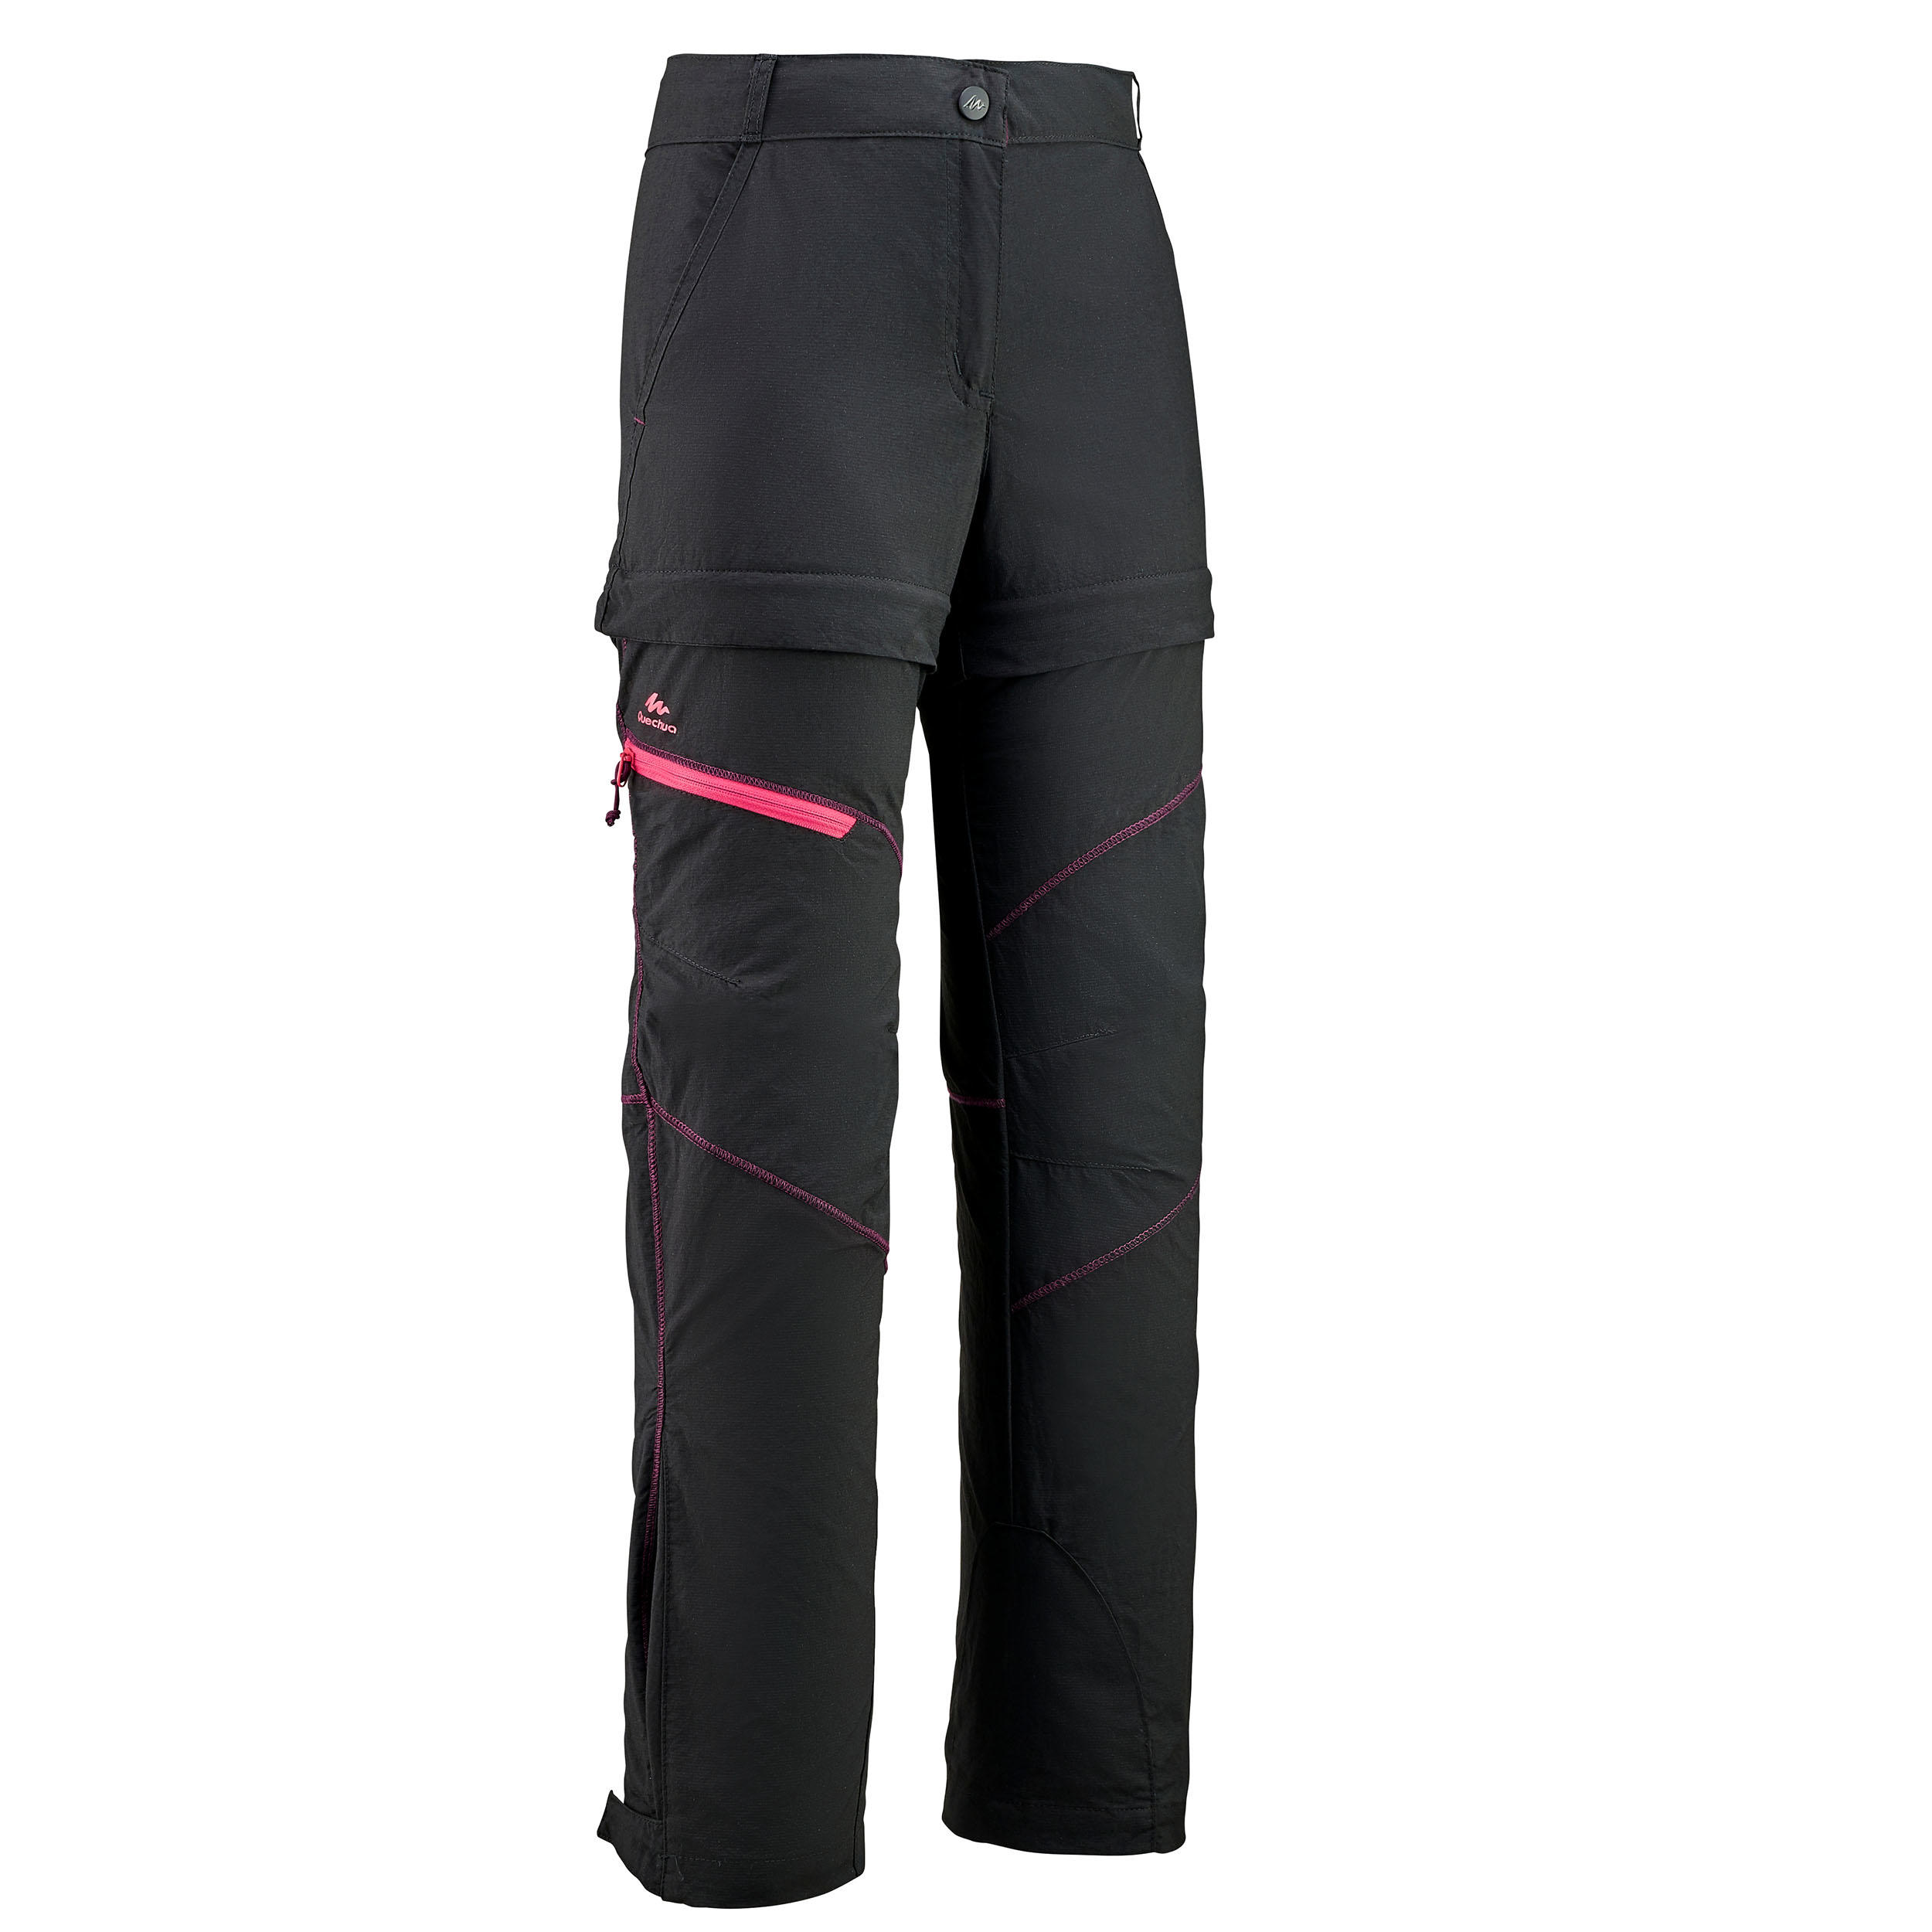 MENS HIKING WARM Water Repellent Stretch Trousers Pants Sh500 X-Warm Quechua  £51.98 - PicClick UK